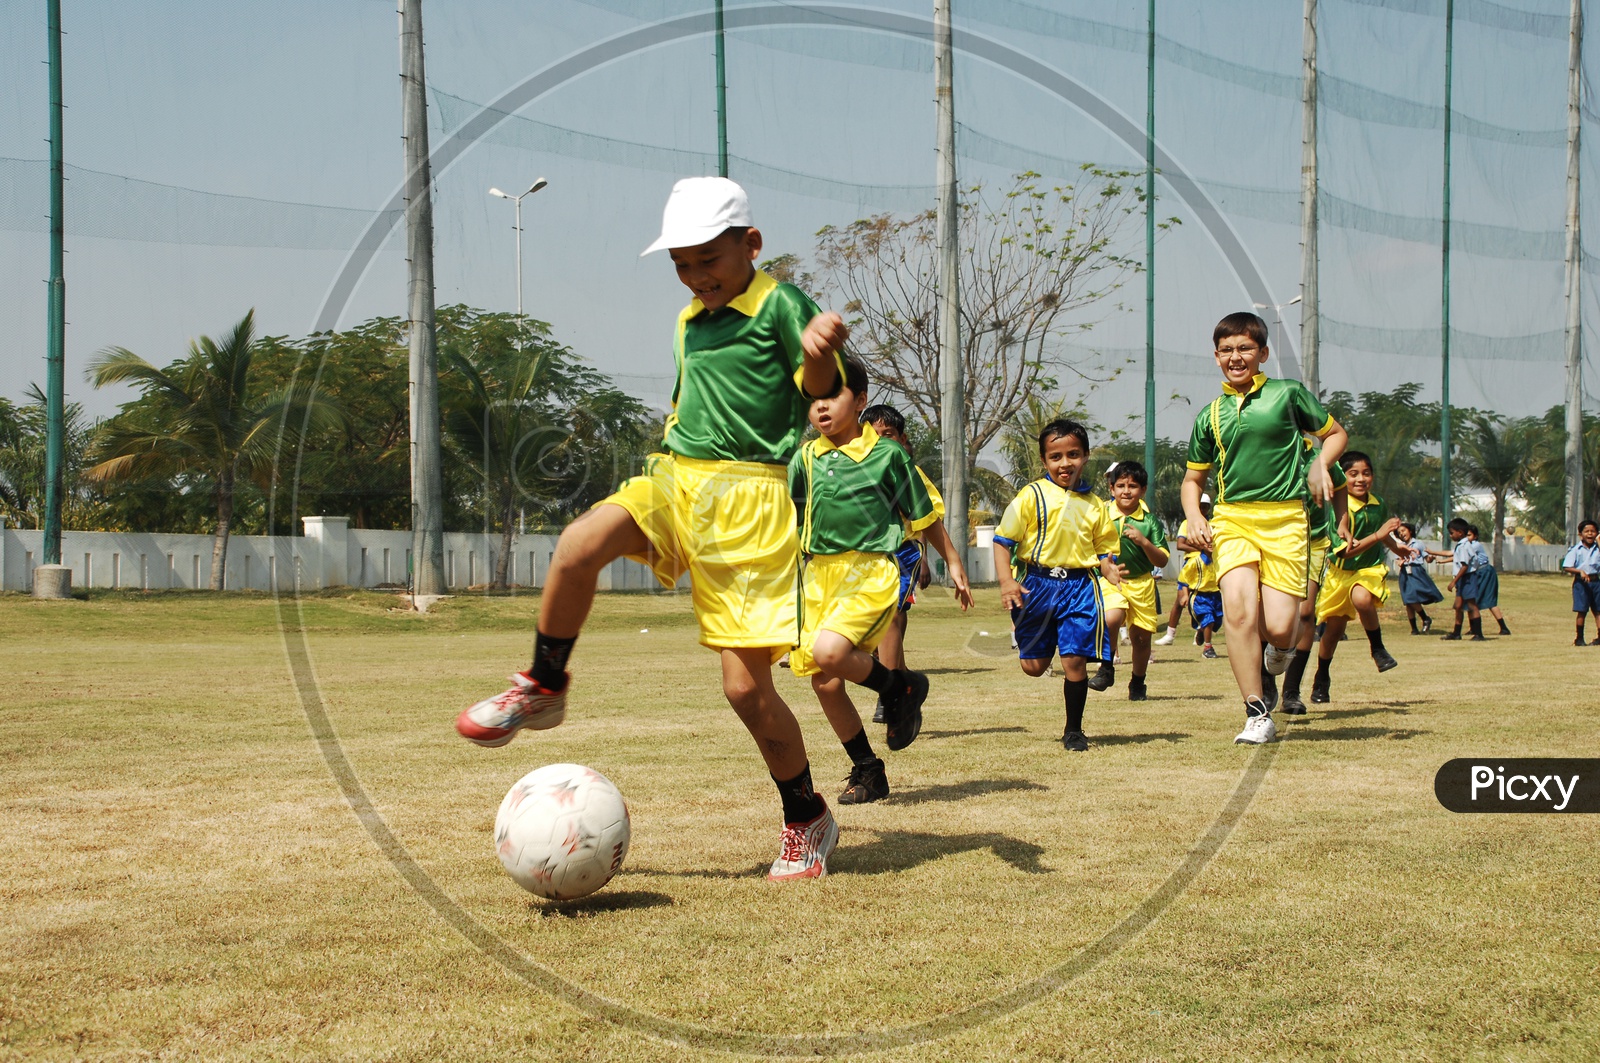 School Children Playing Football